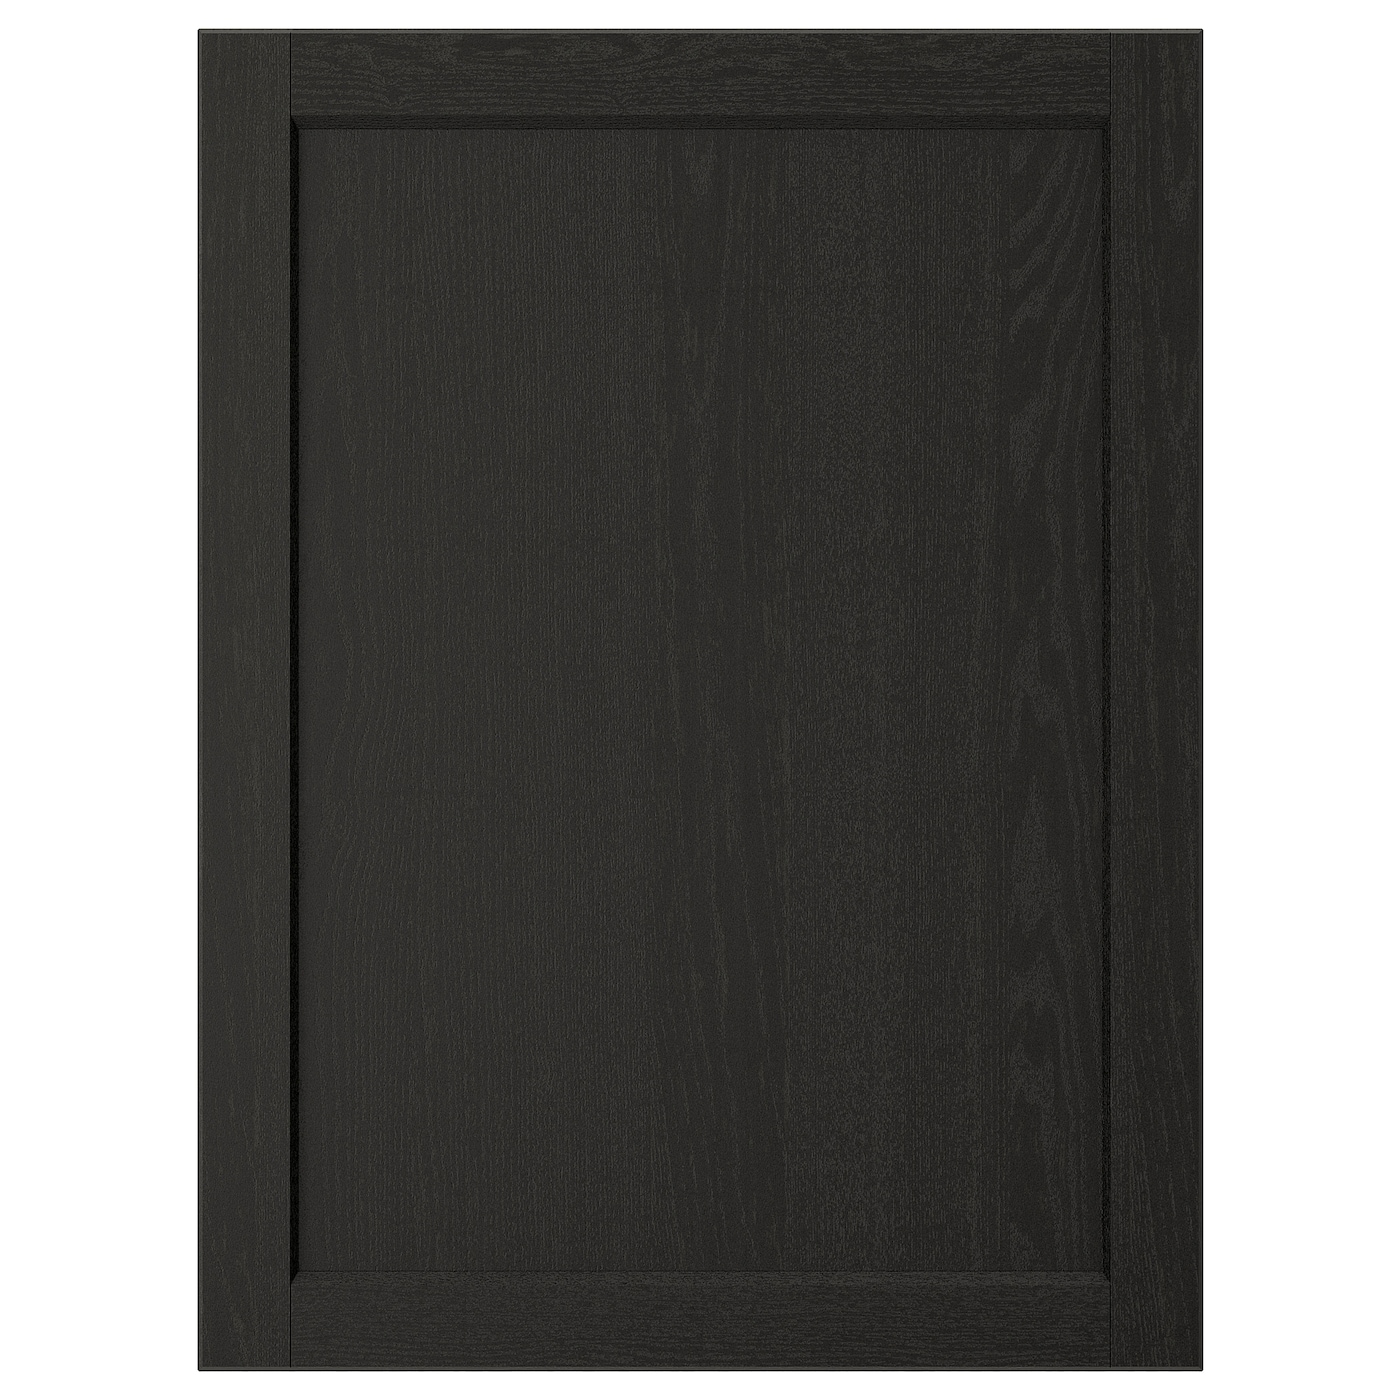 Дверца - IKEA LERHYTTAN, 80х60 см, черный, ЛЕРХЮТТАН ИКЕА